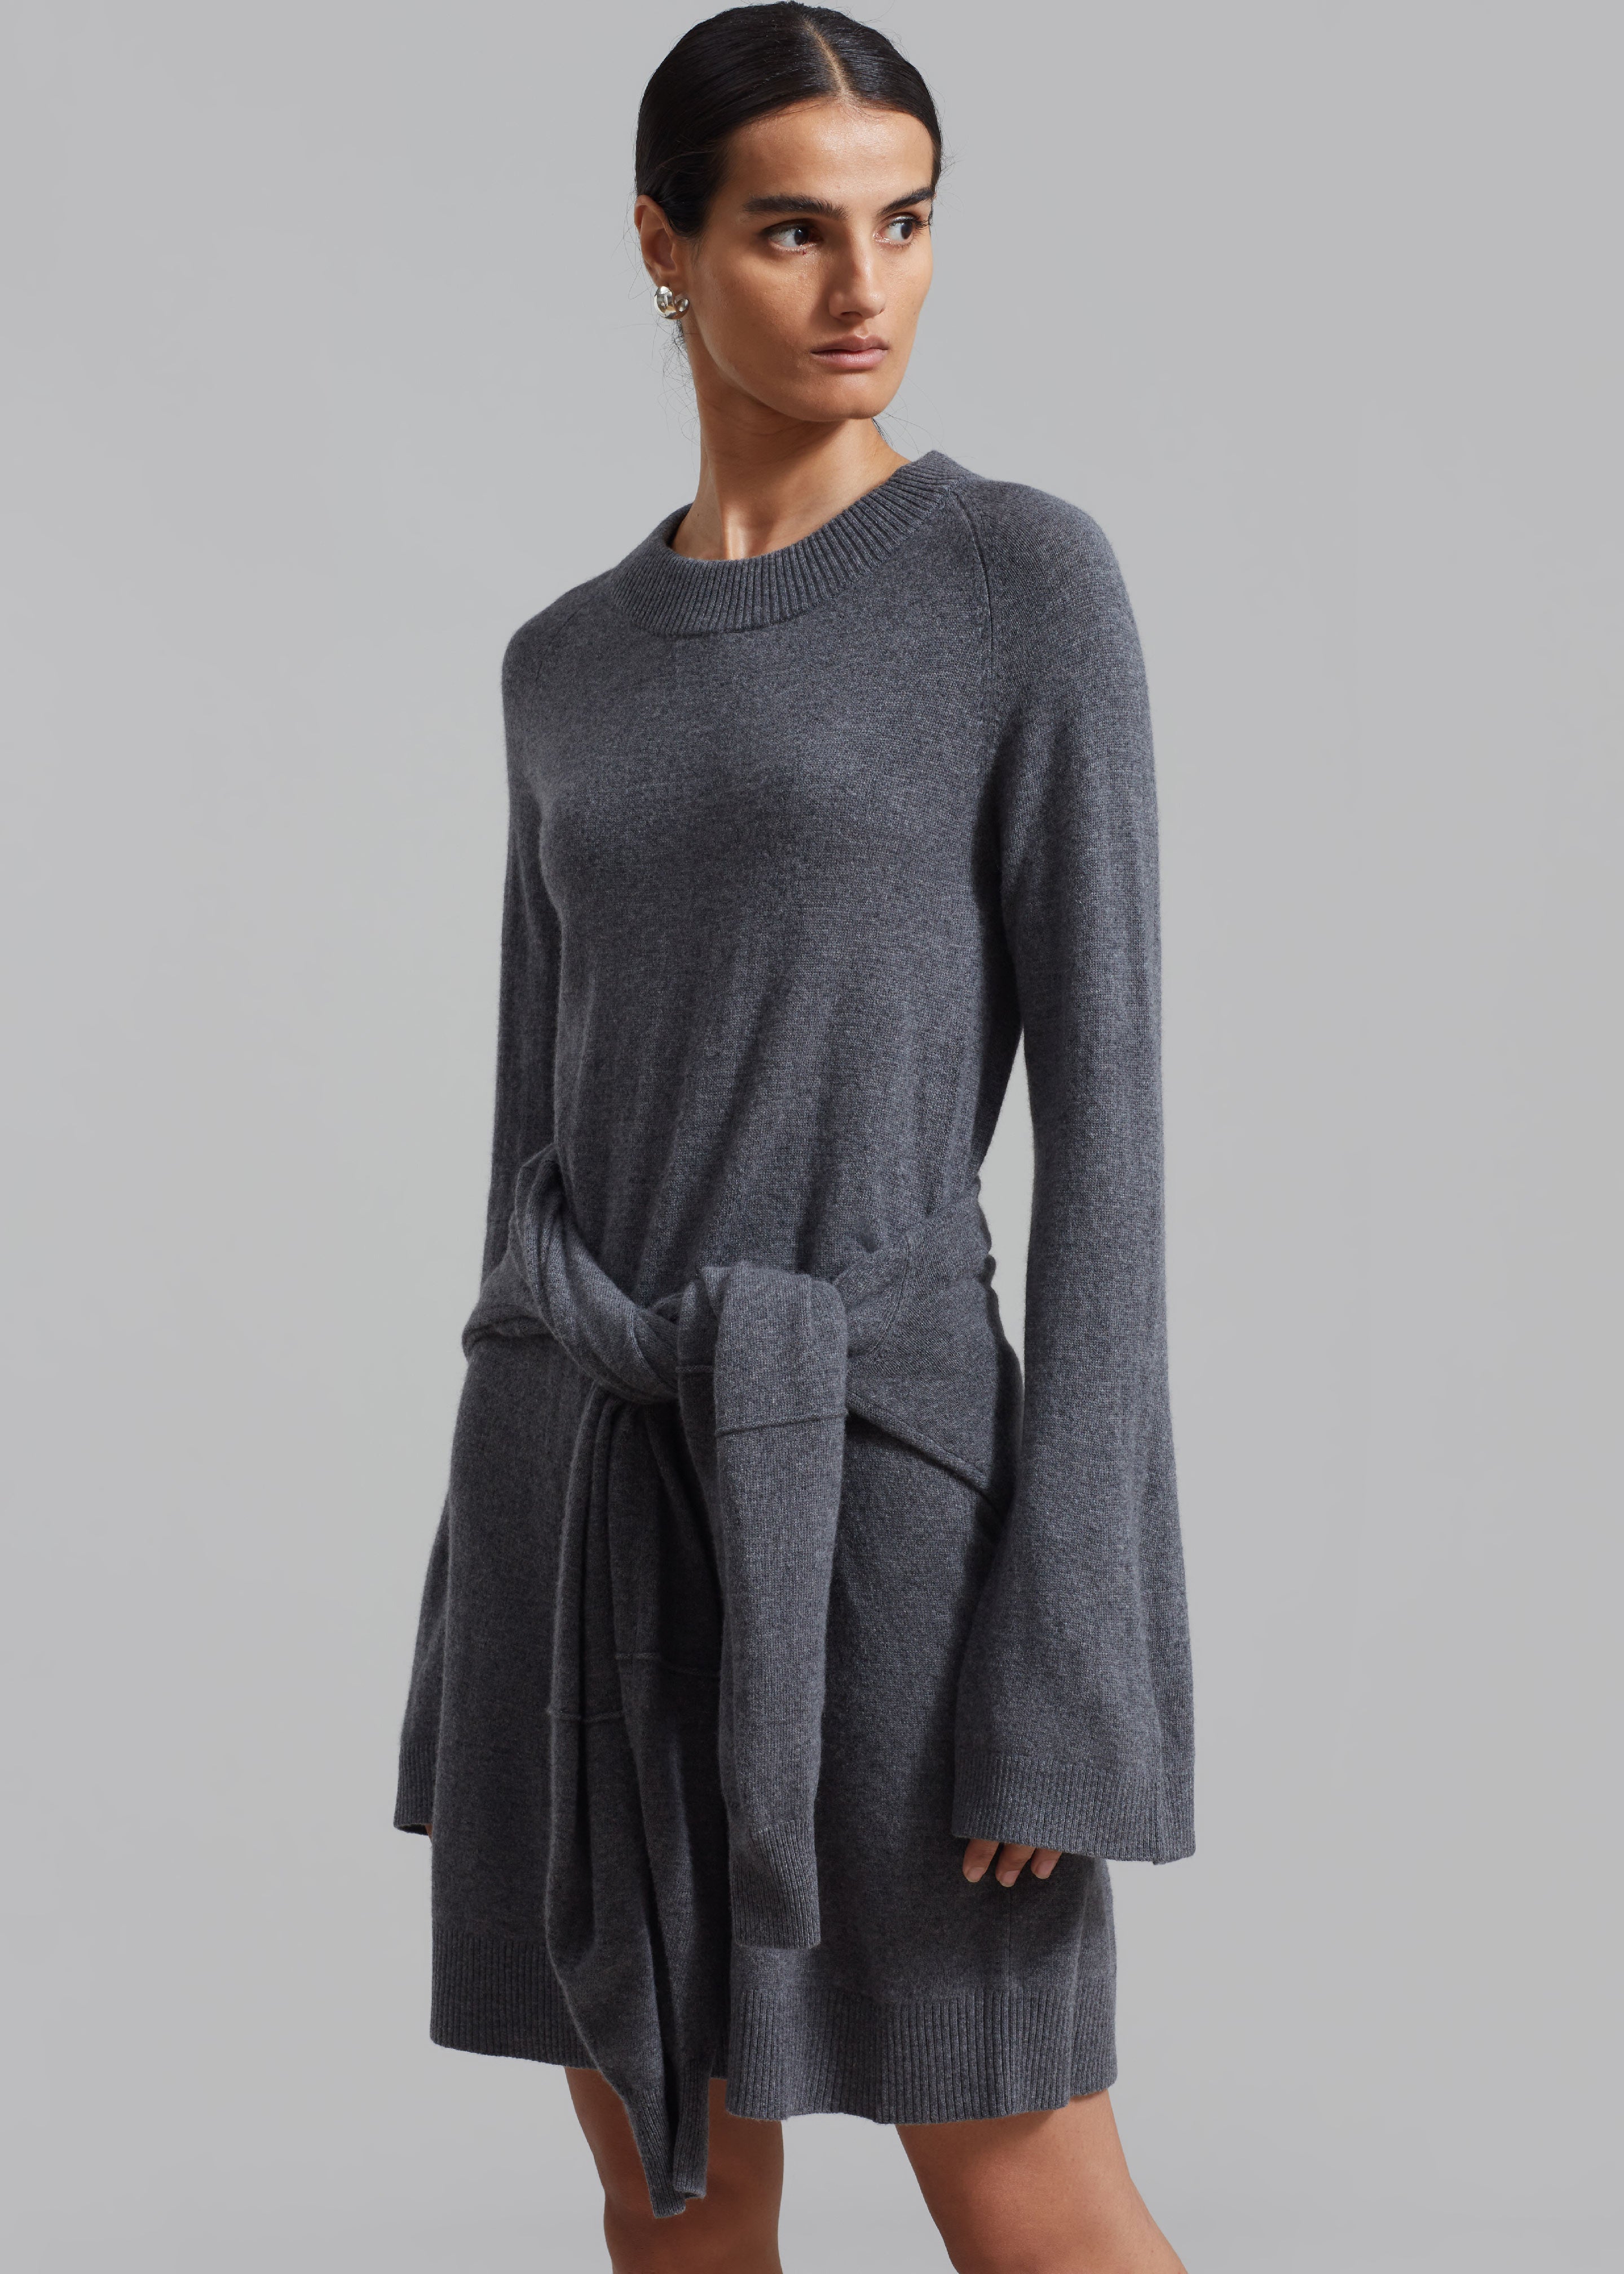 The Garment Como Raglan Dress - Grey Melange - 5